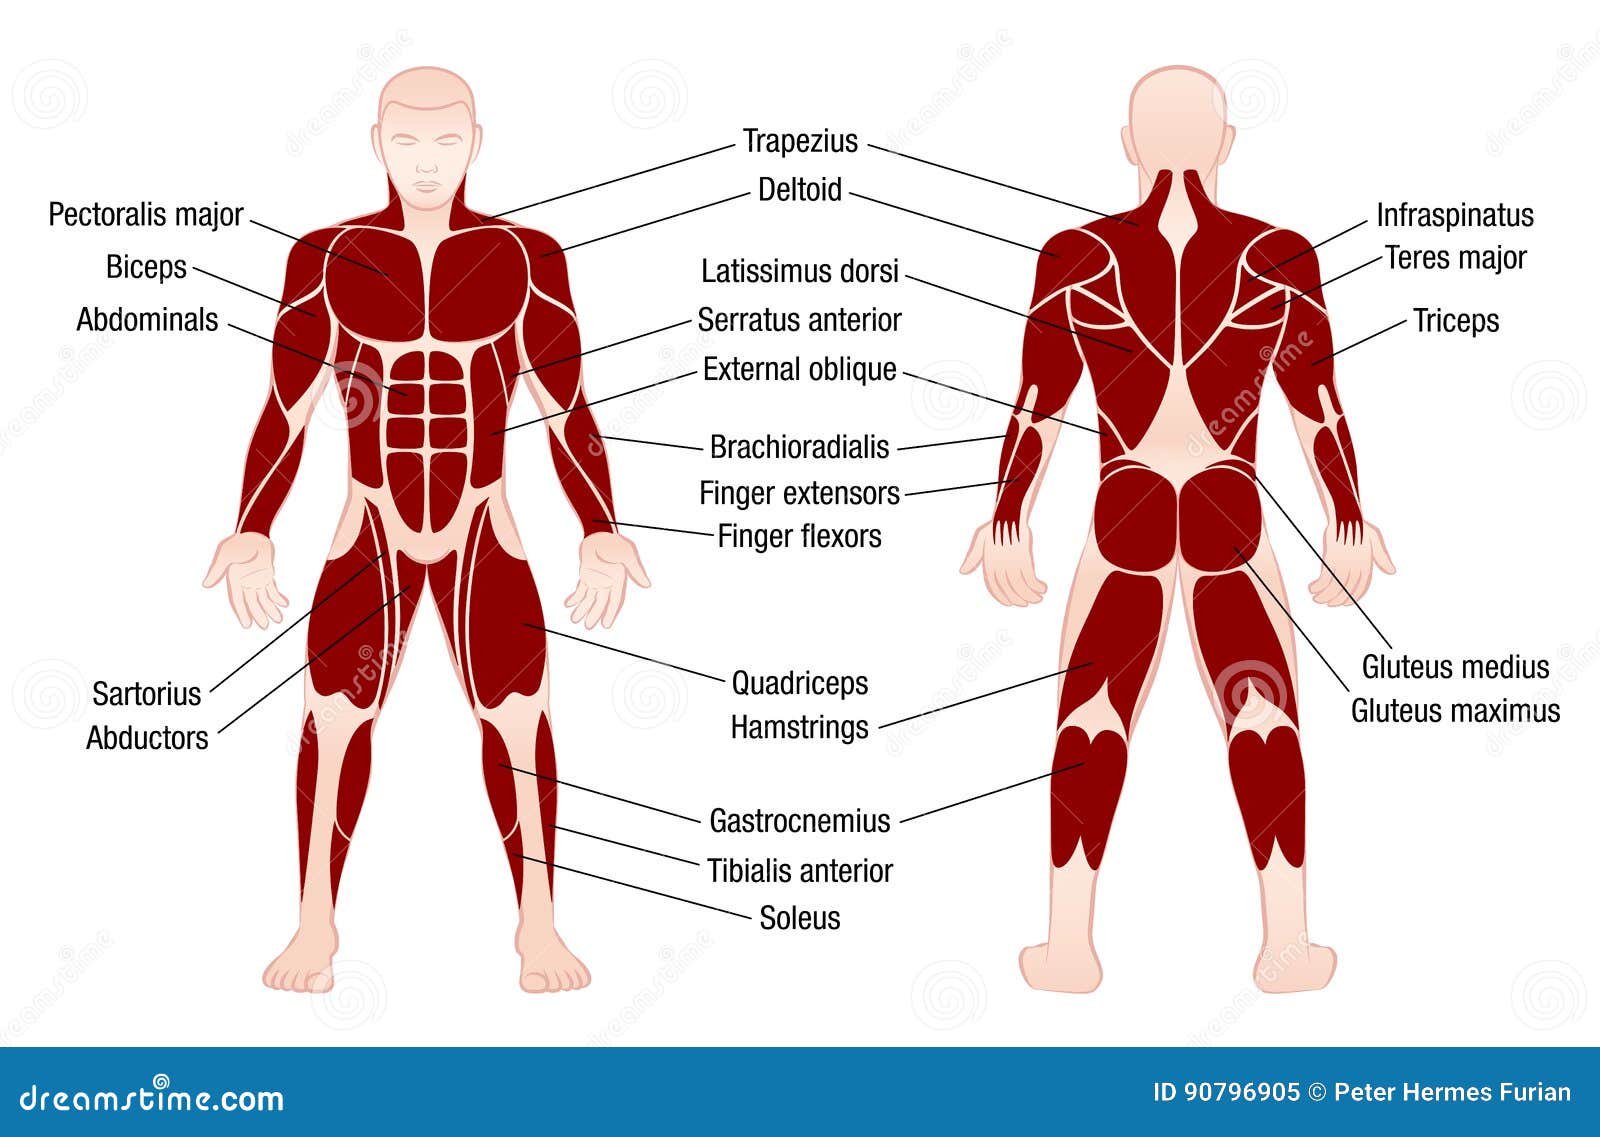 Muscles Chart Description Muscular Body Man Stock Vector Illustration Of Deltoids Health 90796905